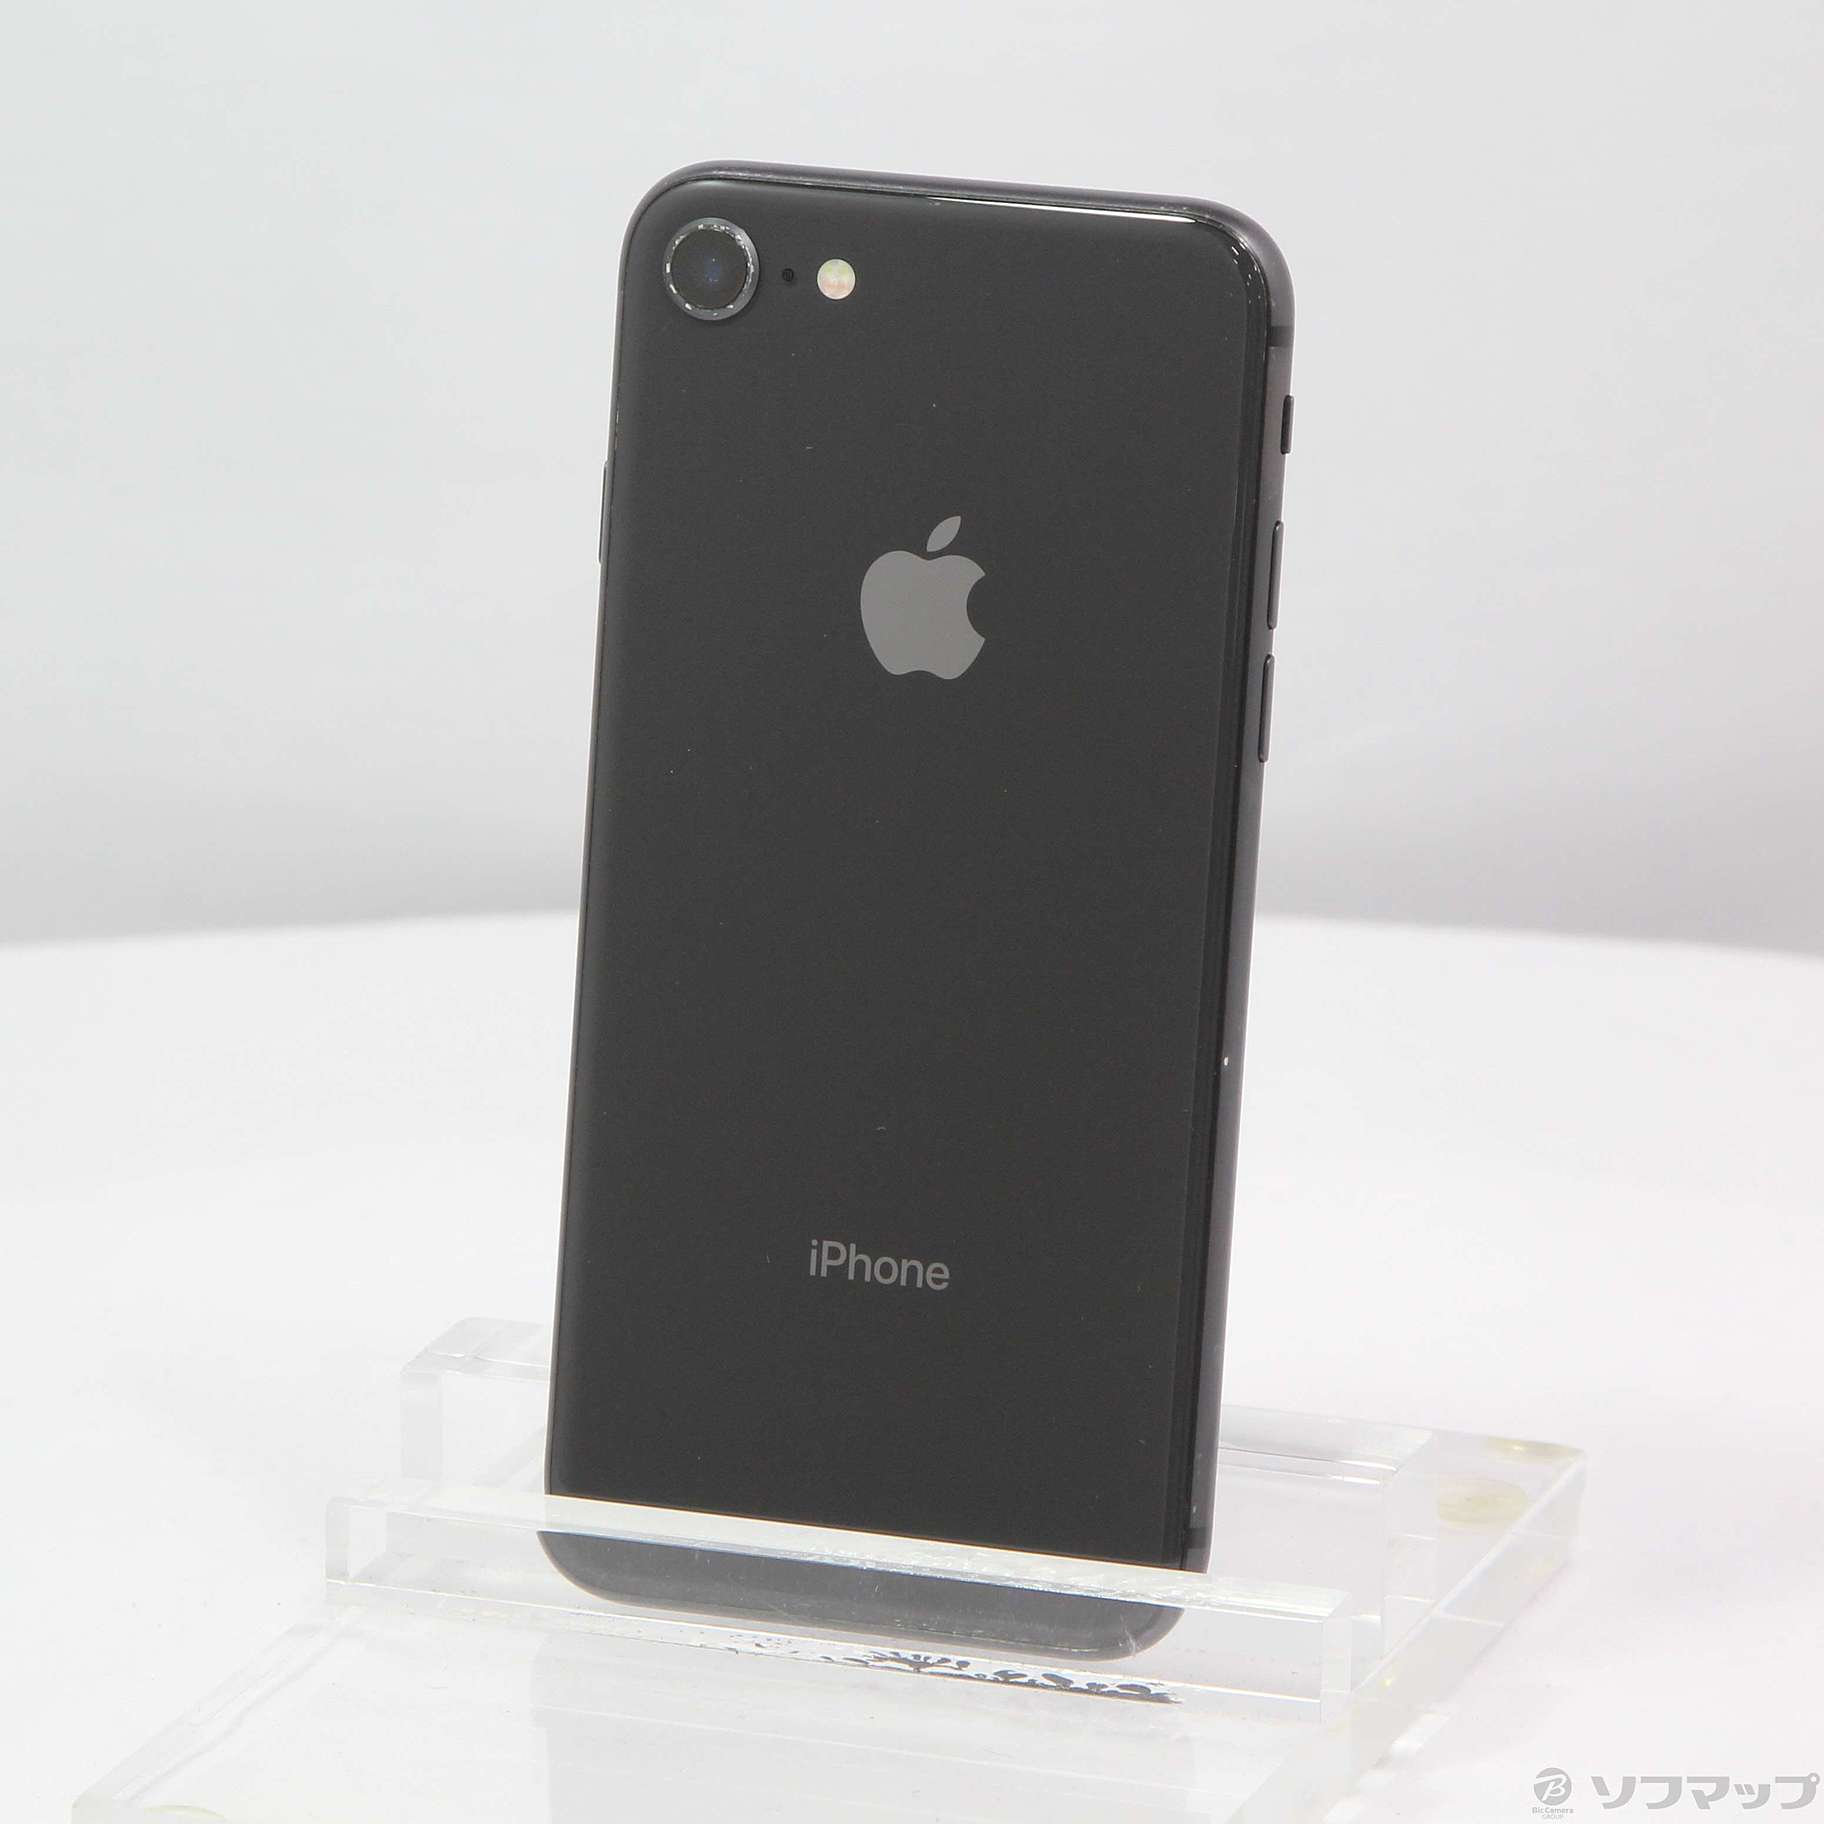 728)iPhone 8 Space Gray 64 GB SIMフリー-